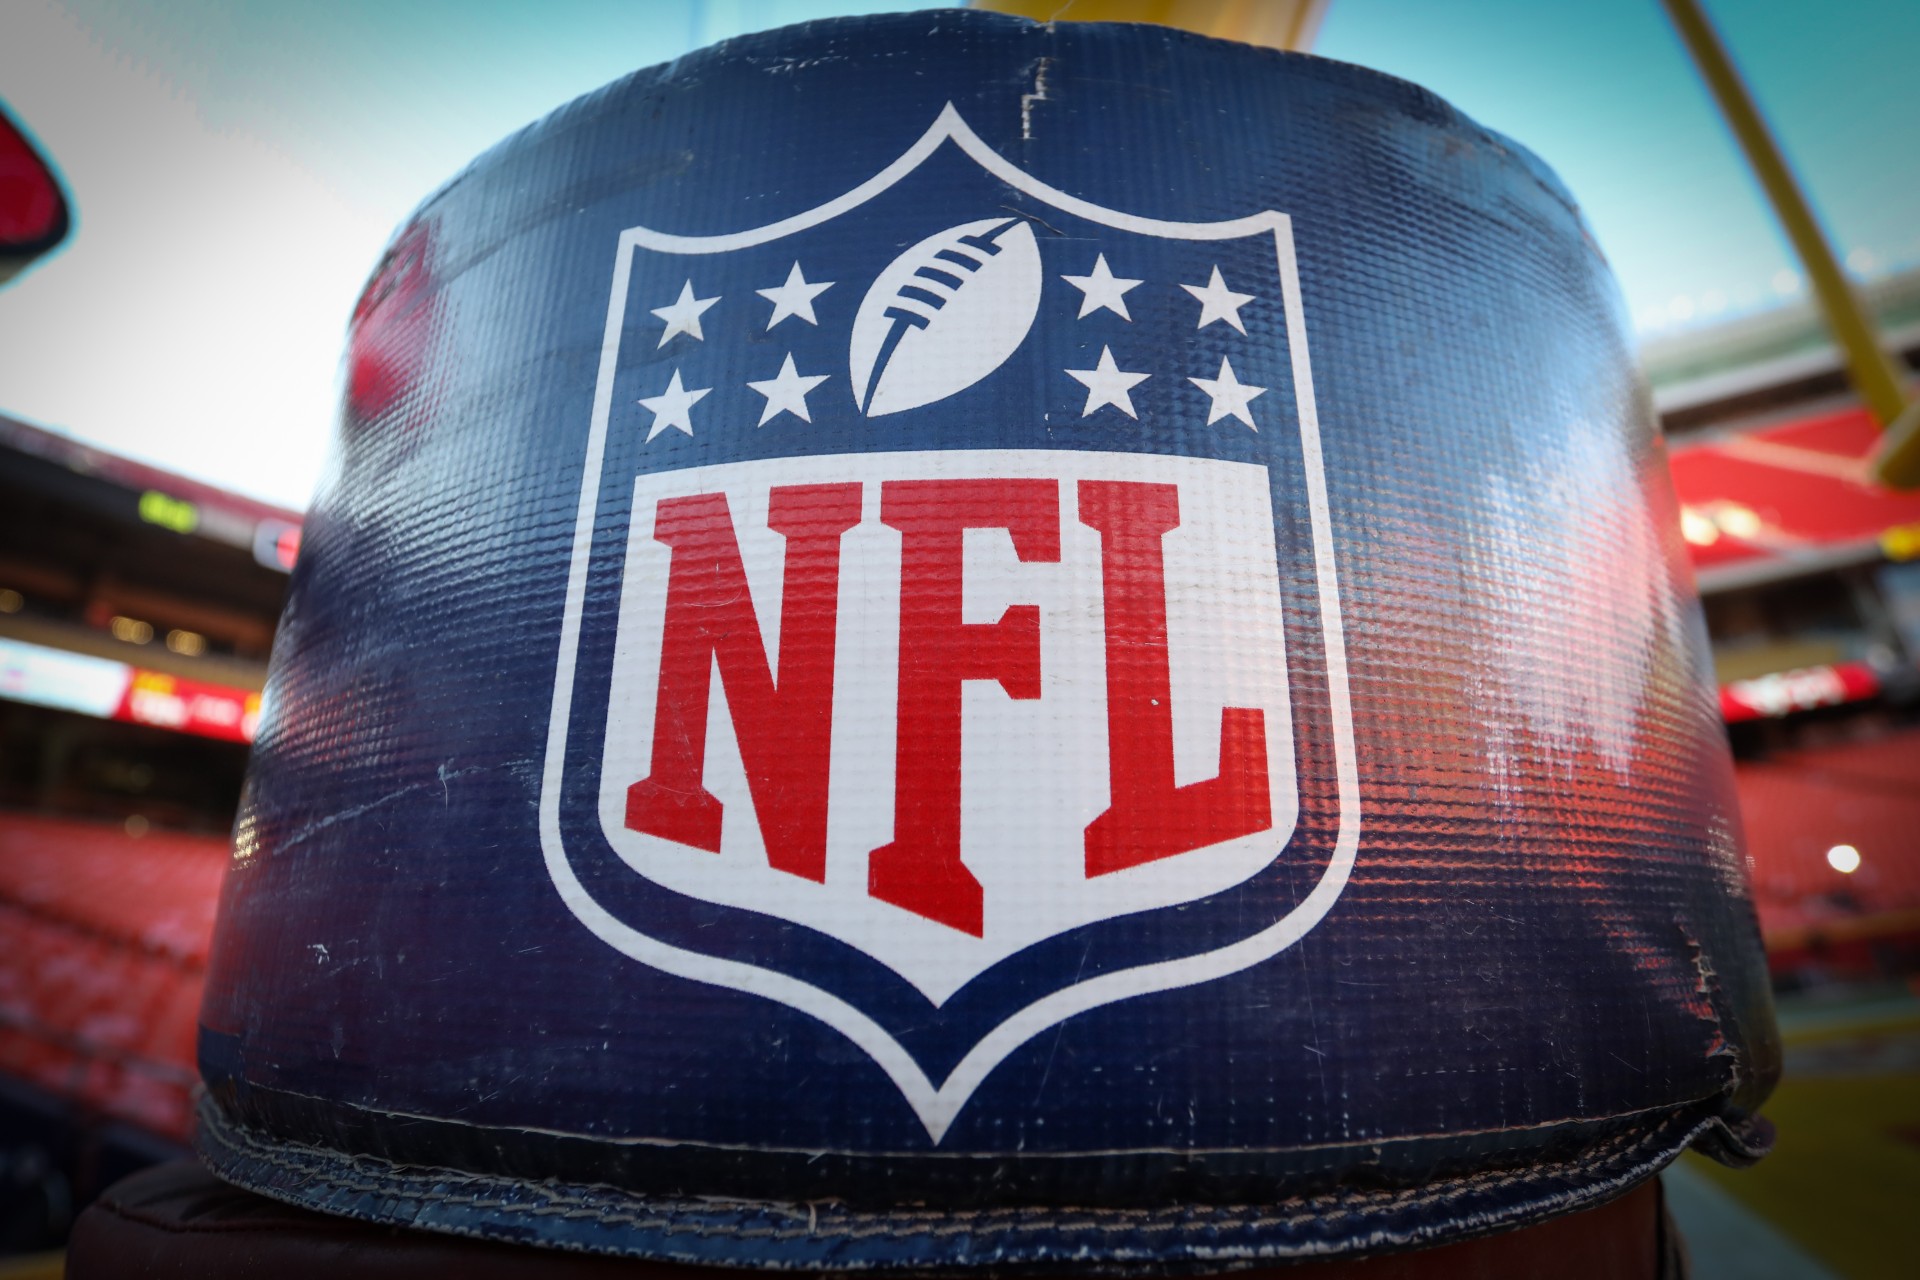 Jets vs Commanders Live Stream: چگونه بازی NFL را به صورت رایگان تماشا کنیم